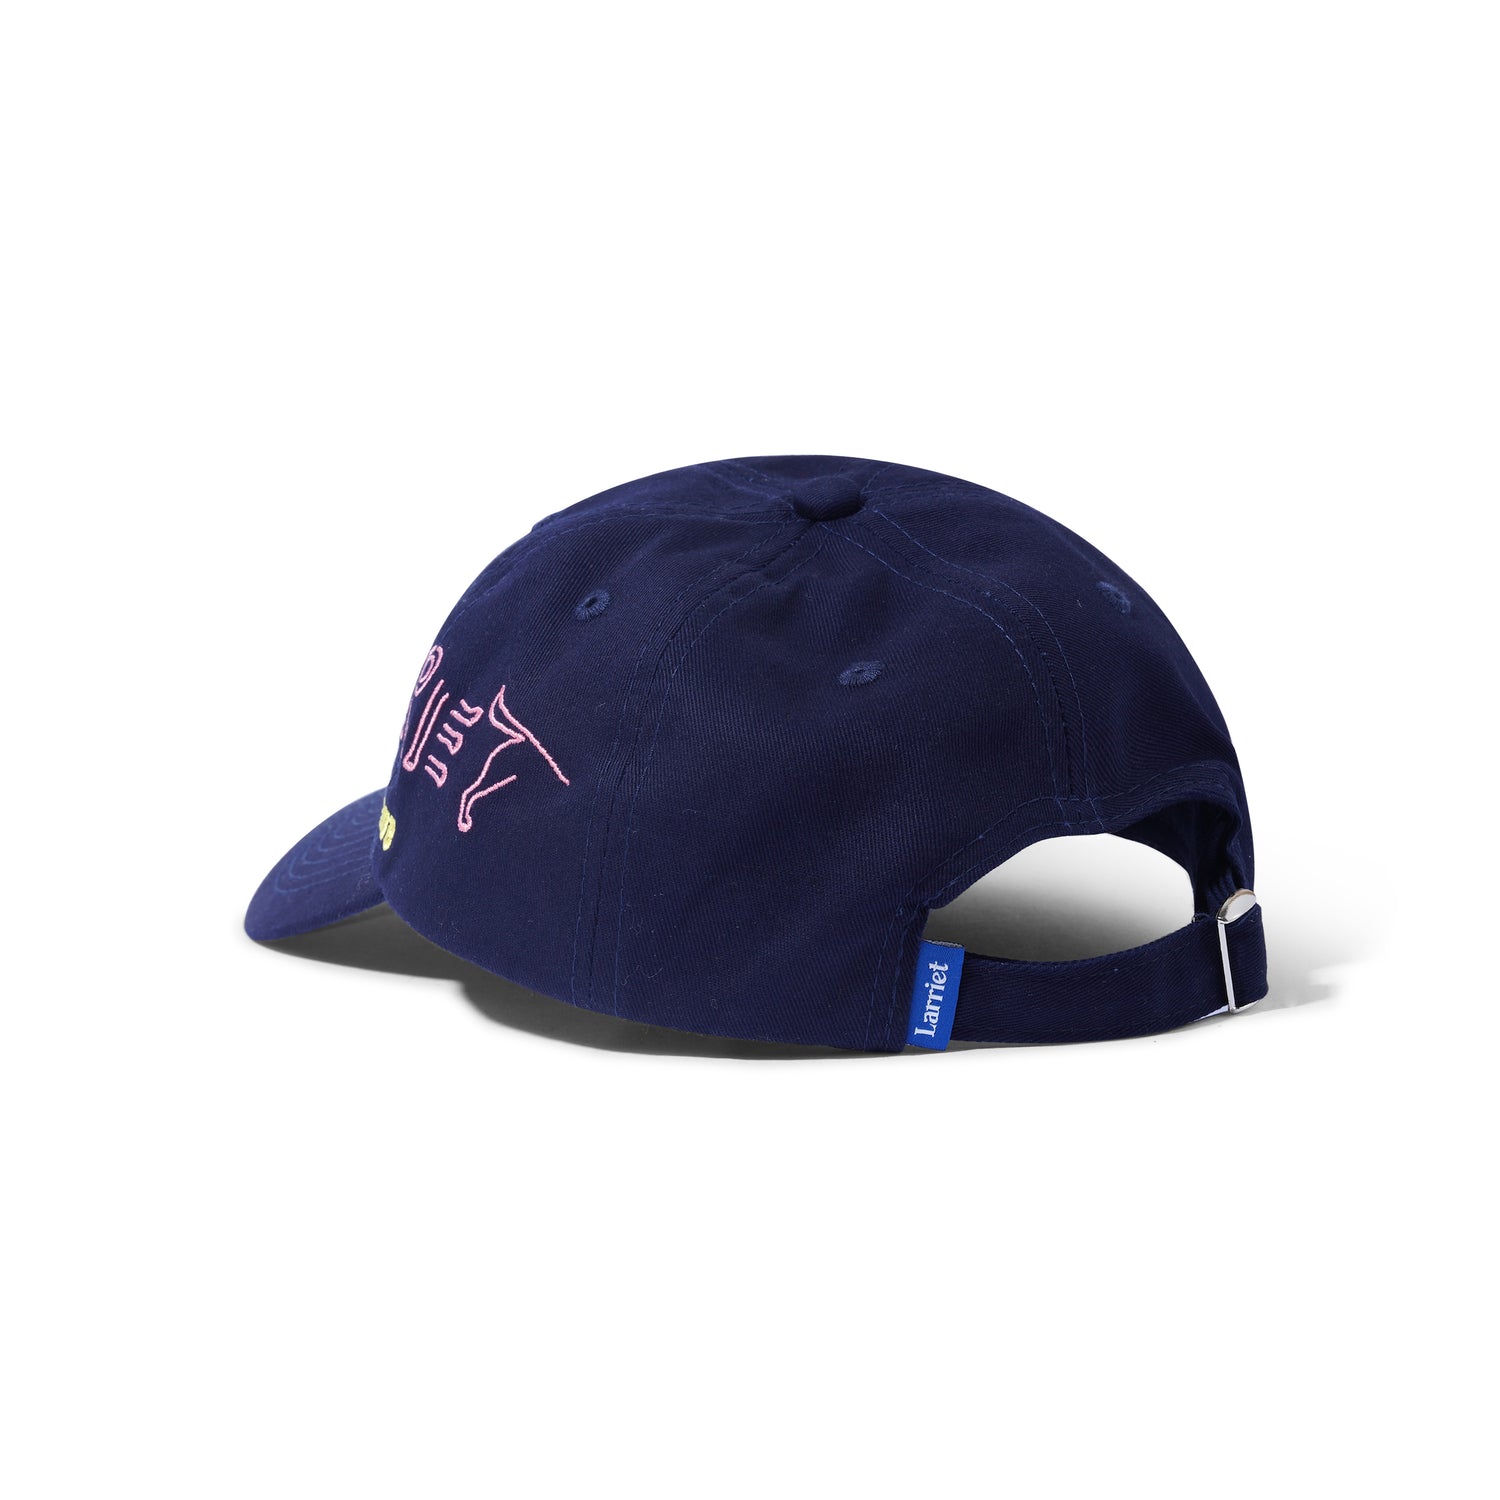 K9 Club Hat, Navy